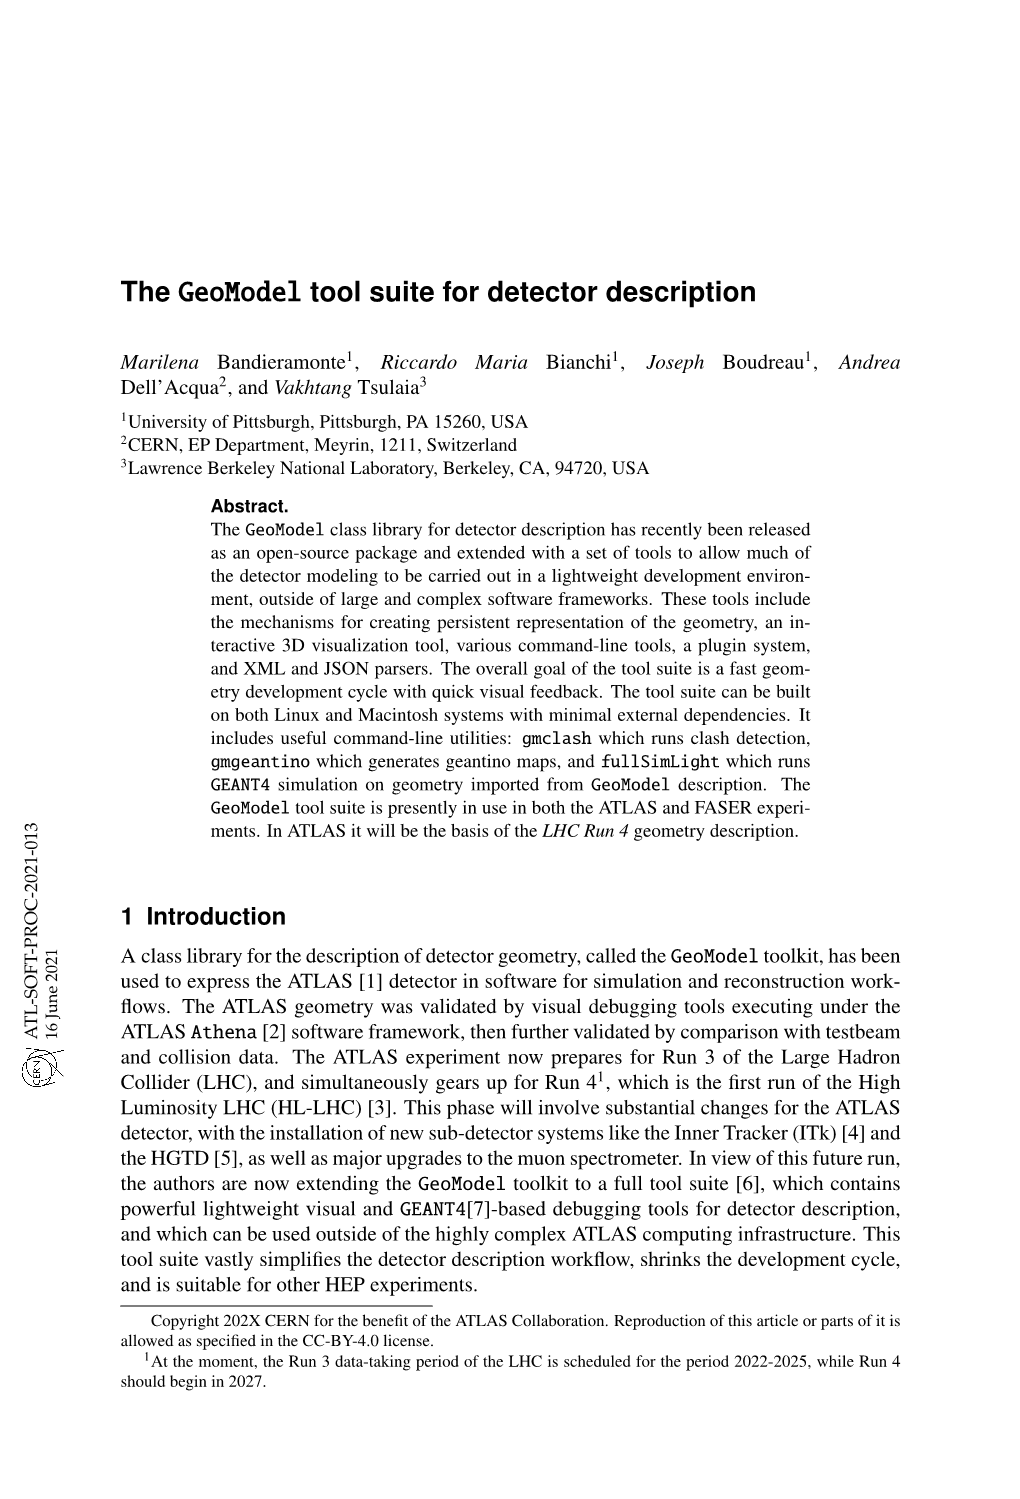 The Geomodel Tool Suite for Detector Description